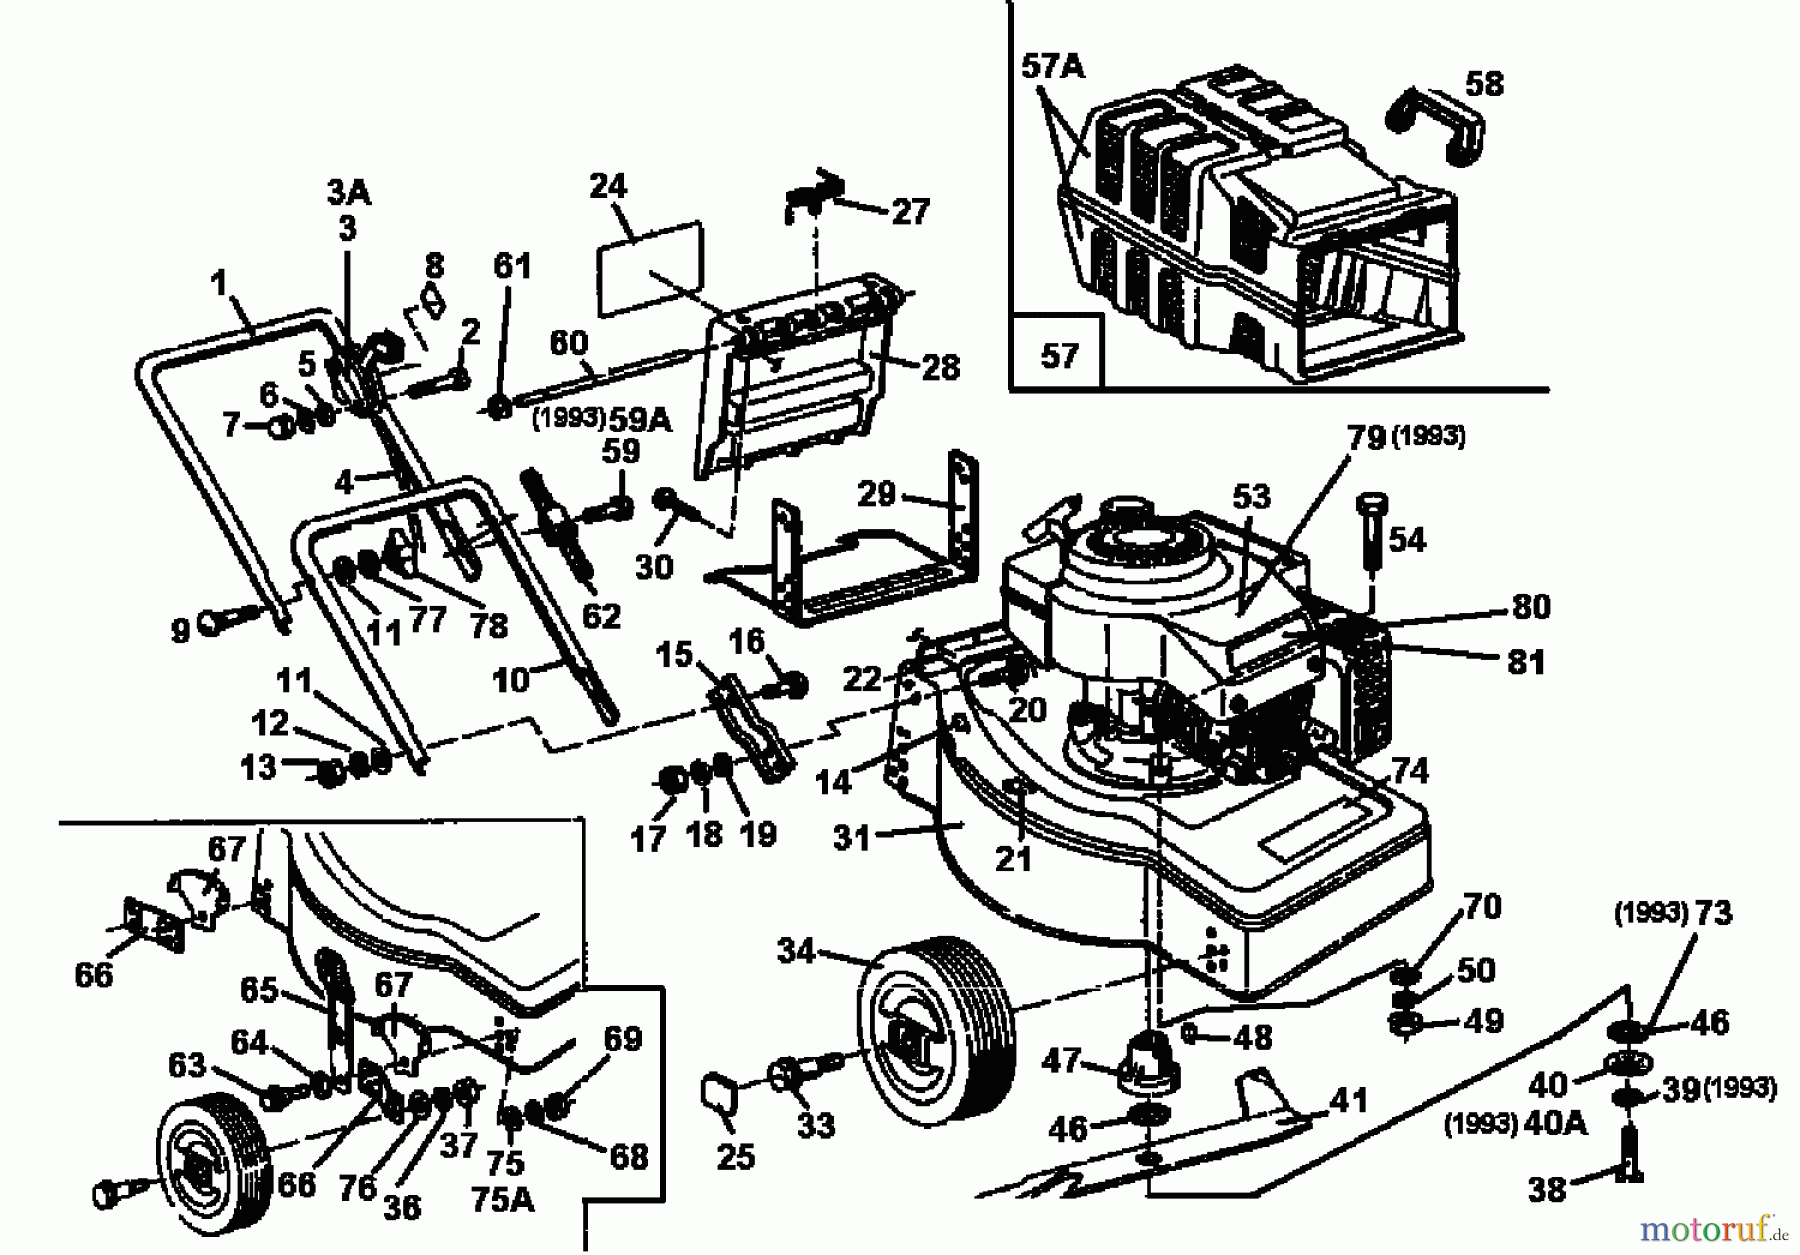  Diana Petrol mower 45 B 02813.06  (1993) Basic machine